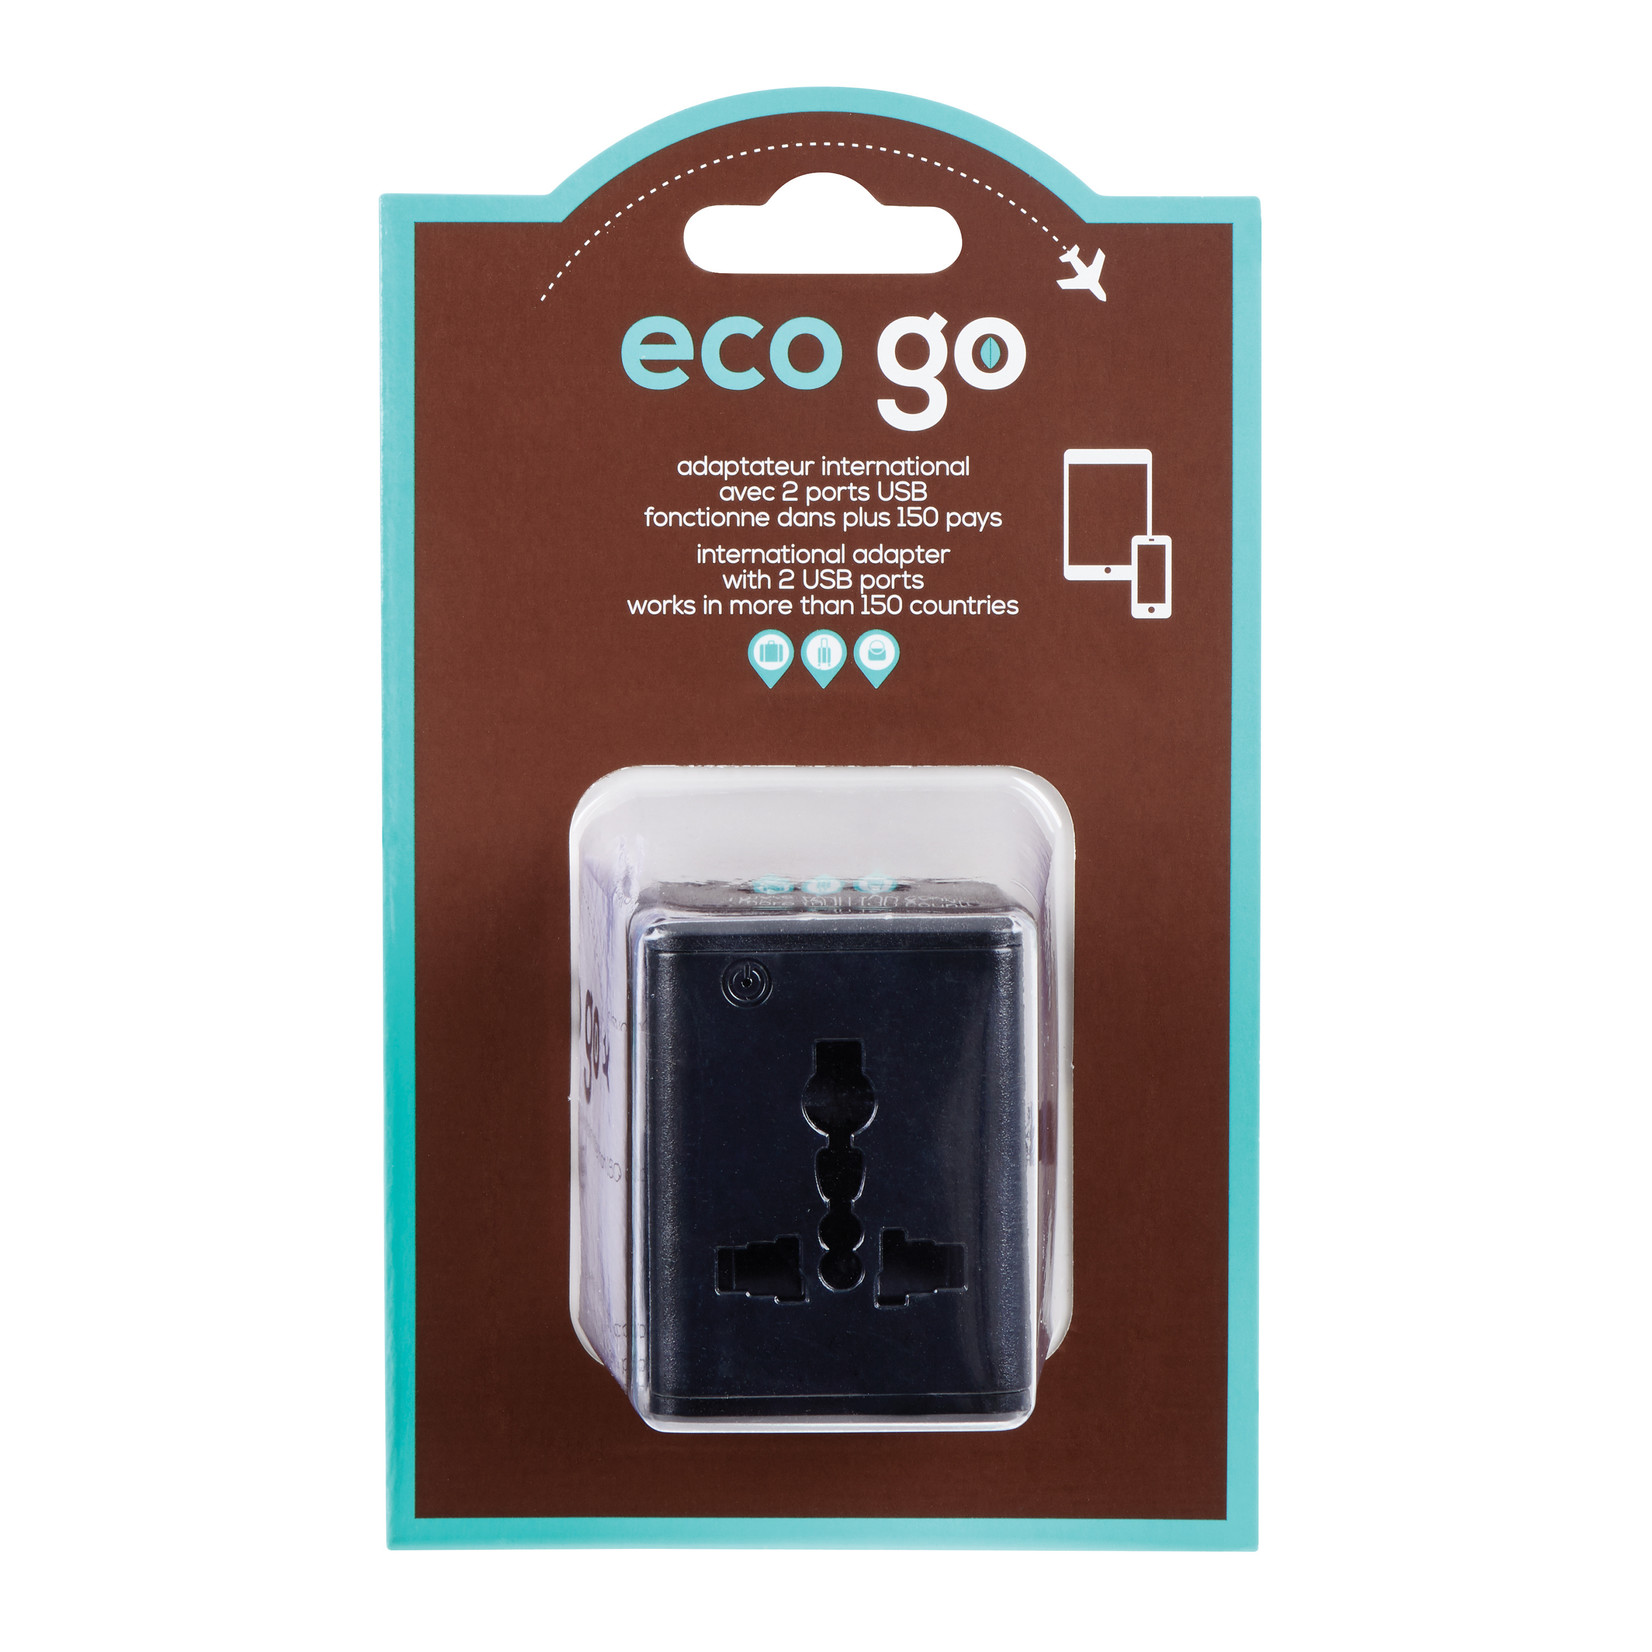 ECO GO 503216  -  ADAPTEUR DE VOYAGE INTERNATIONAL A/C 2 PORTS USB ECO GO